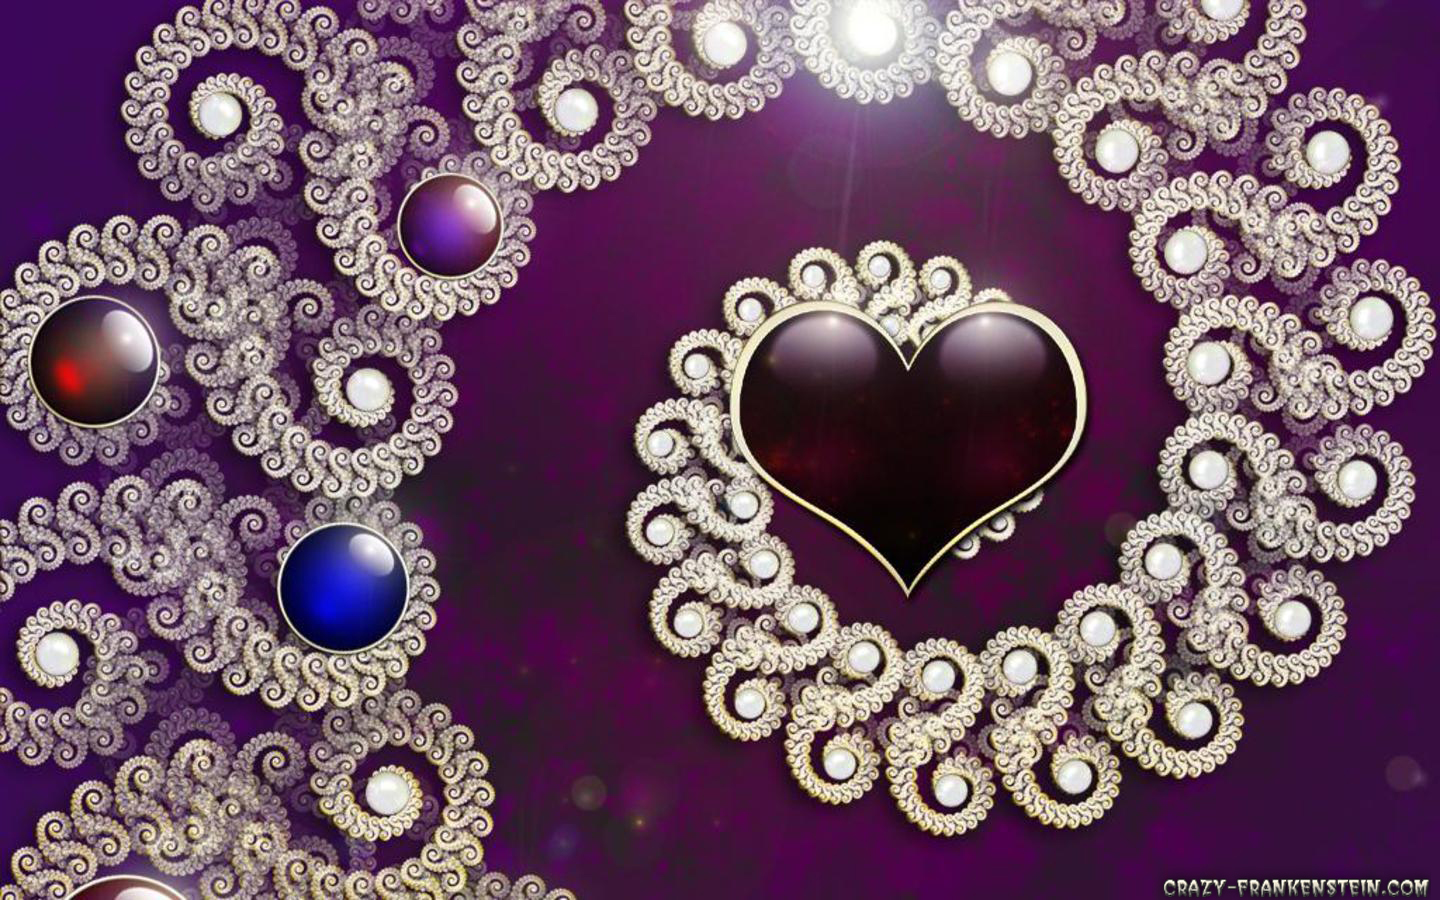 Beautiful Wallpapers Of Love-5hcn1js - Best Love Wallpaper Download -  1440x900 Wallpaper 